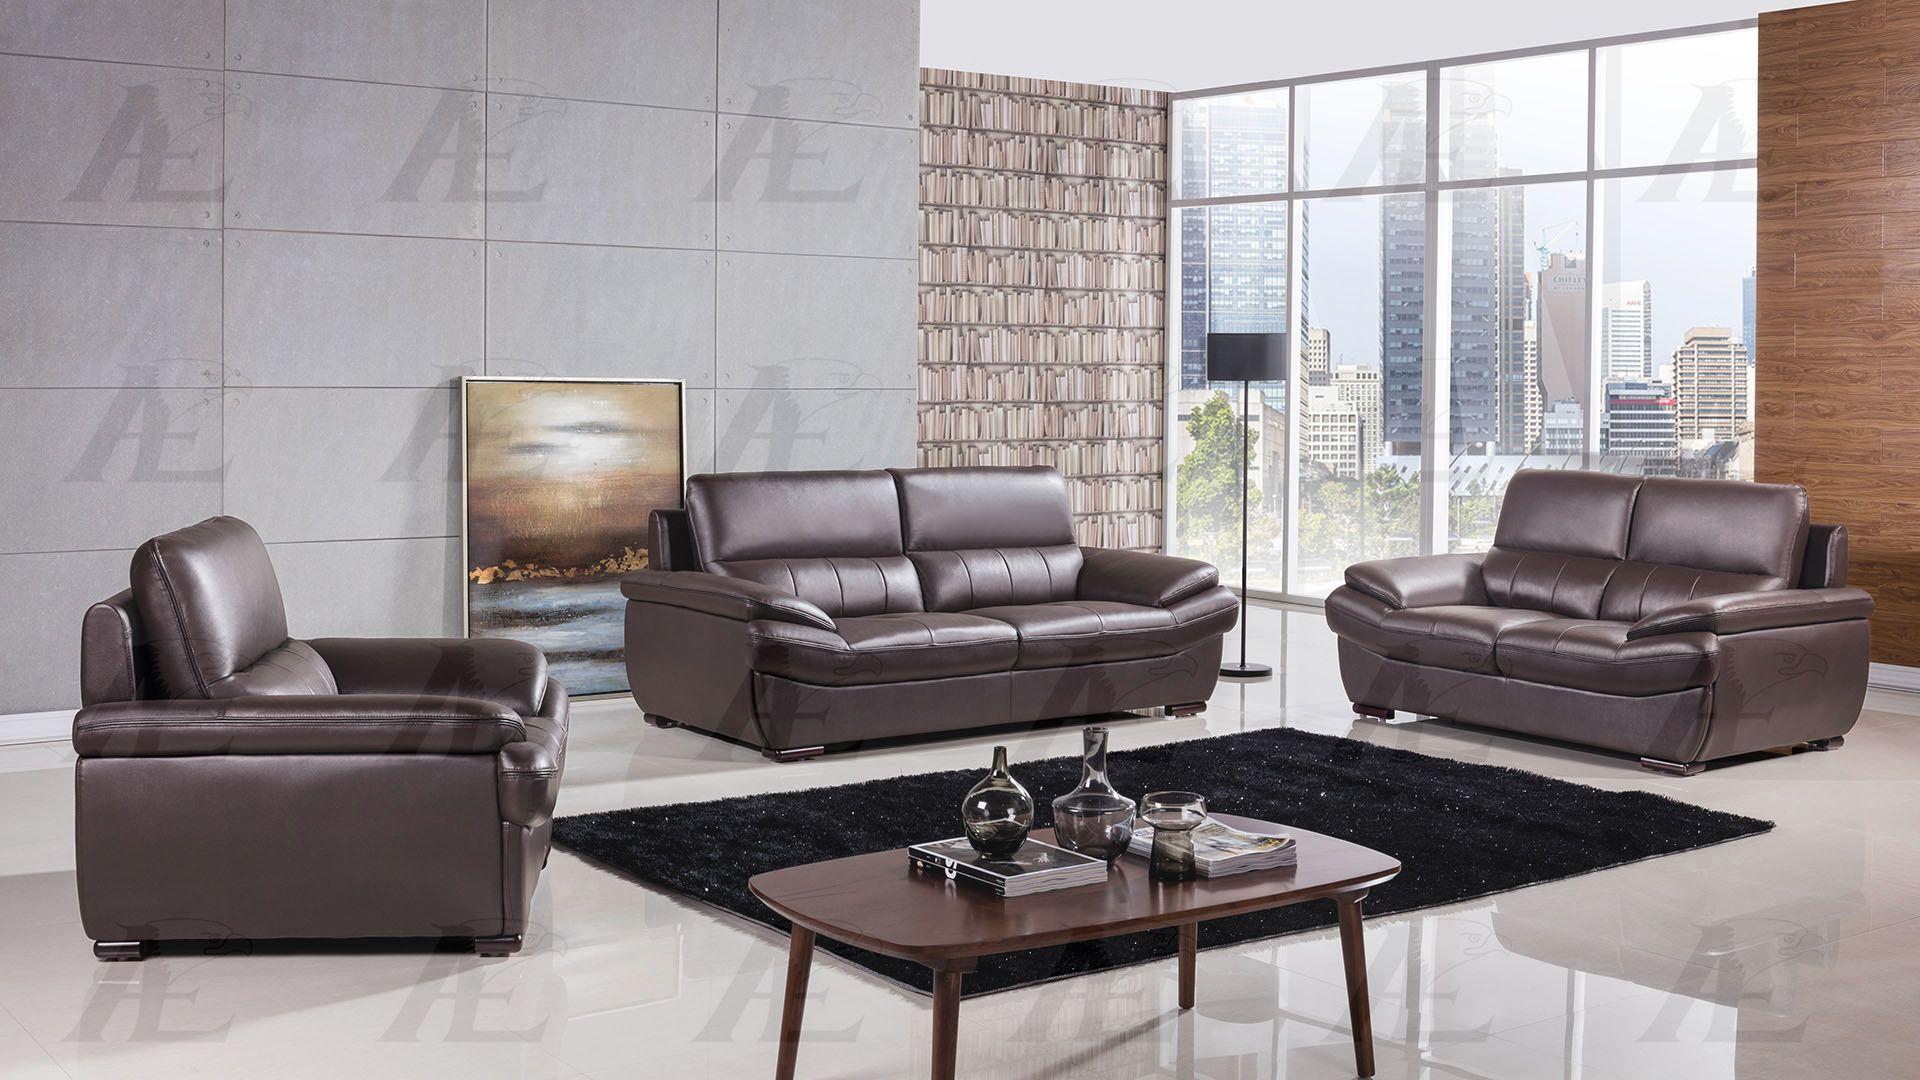 

    
American Eagle EK-B305 Dark Chocolate Genuine Leather Living Room Sofa Set 3pcs in Contemporary Style
